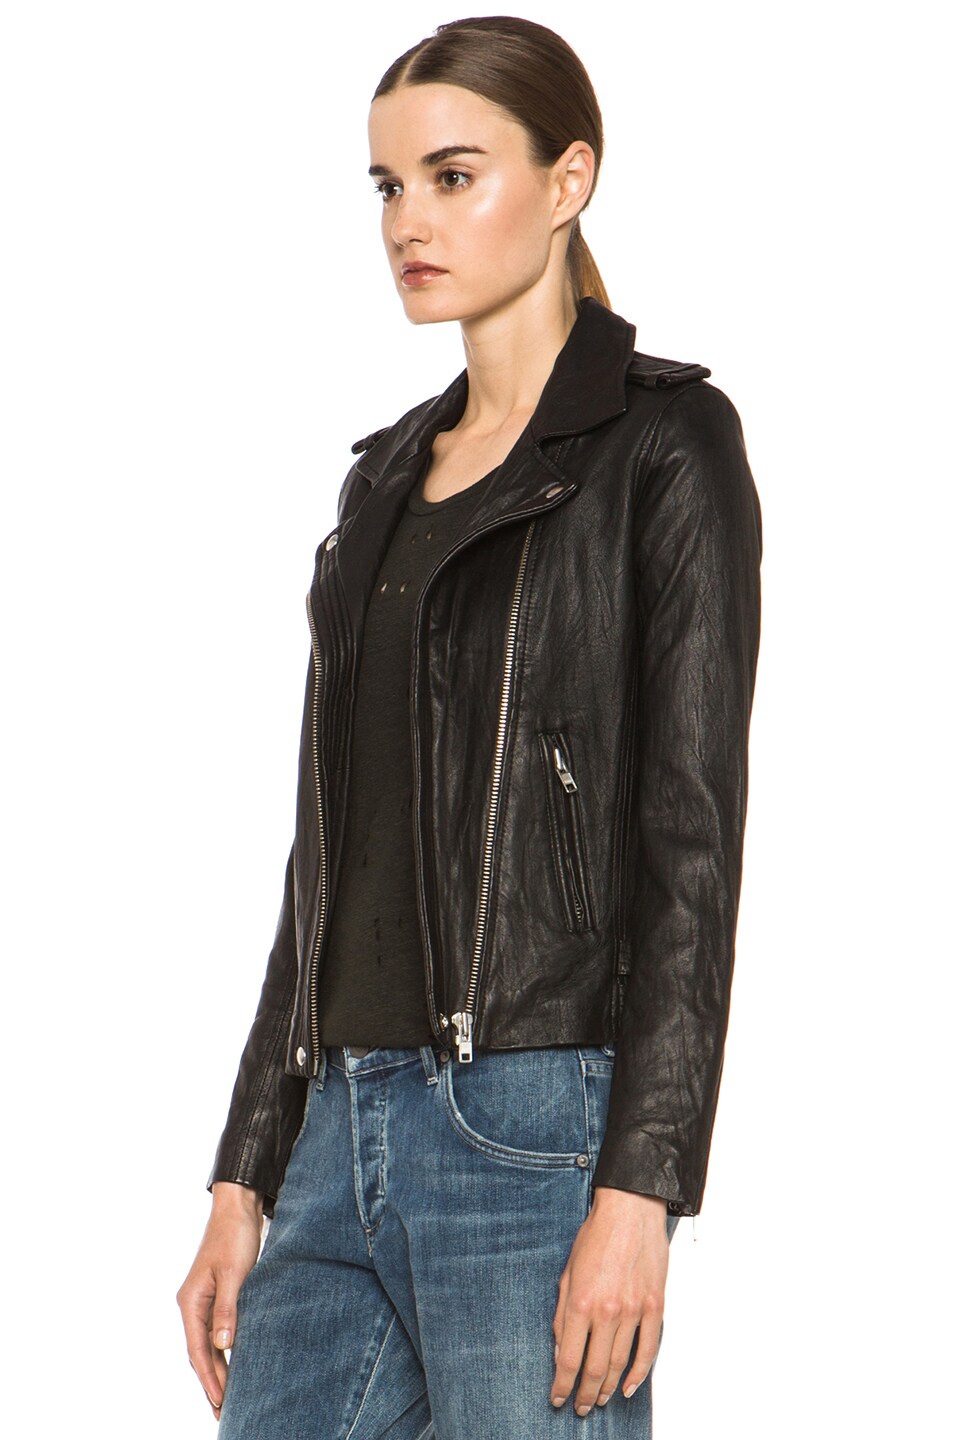 IRO Han Leather Jacket in Black | FWRD